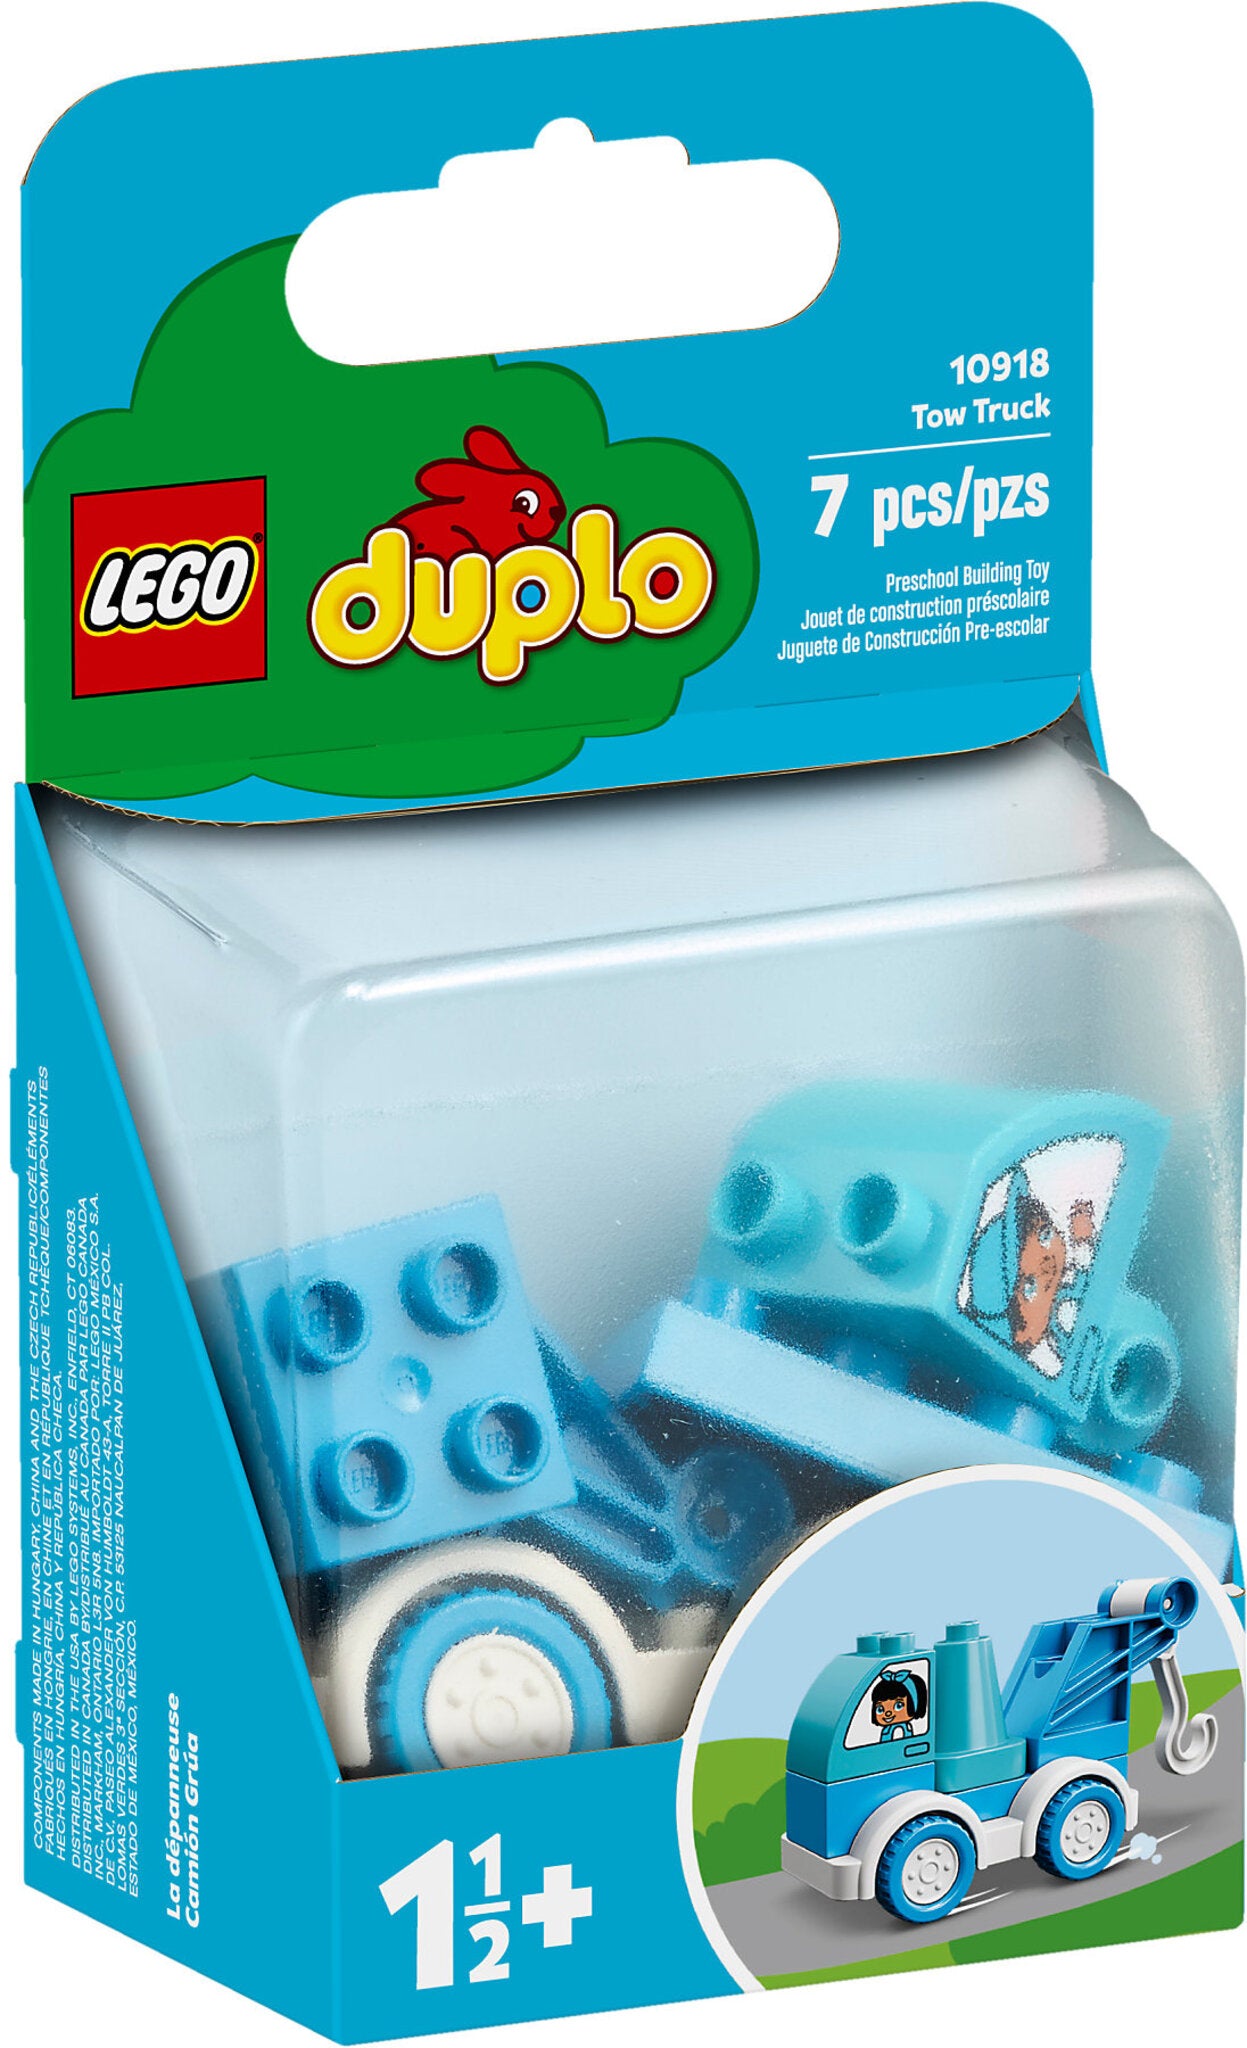 10918 LEGO Duplo - Autogrù